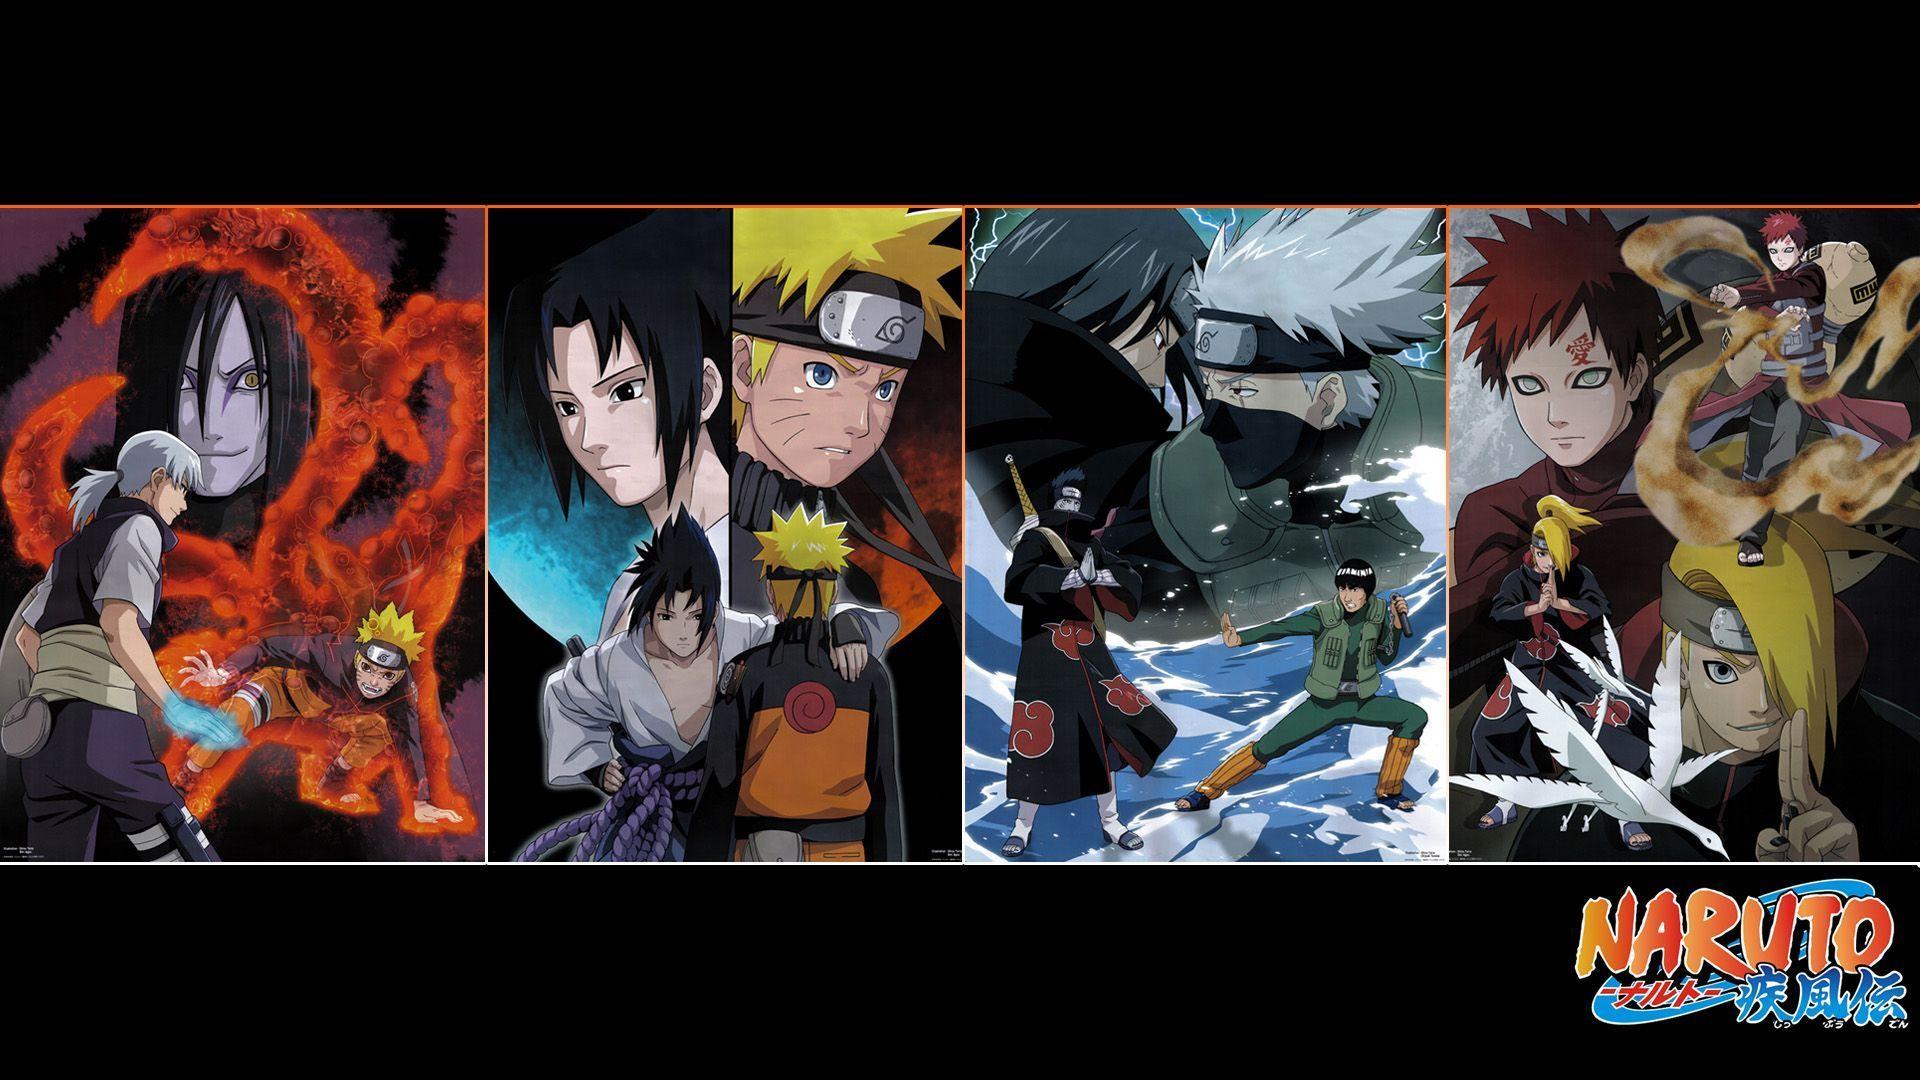 Hd Wallpaper Gusta Naruto En Anime Wallpaper Com Encontraras